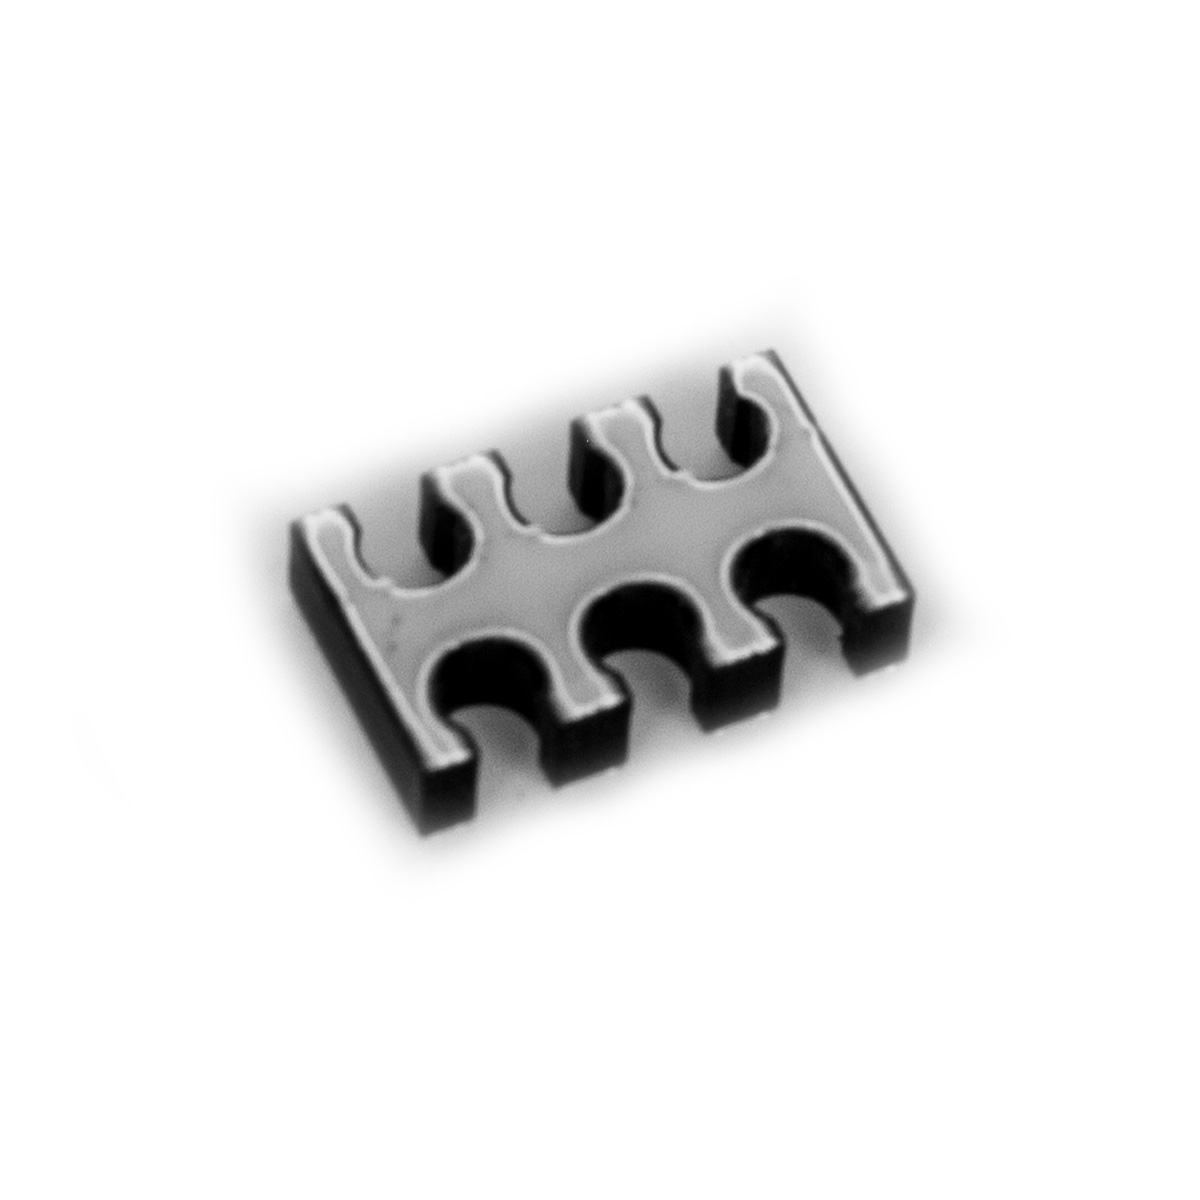 TechForge 6 Slot Cable Comb (Small) 3mm - Black